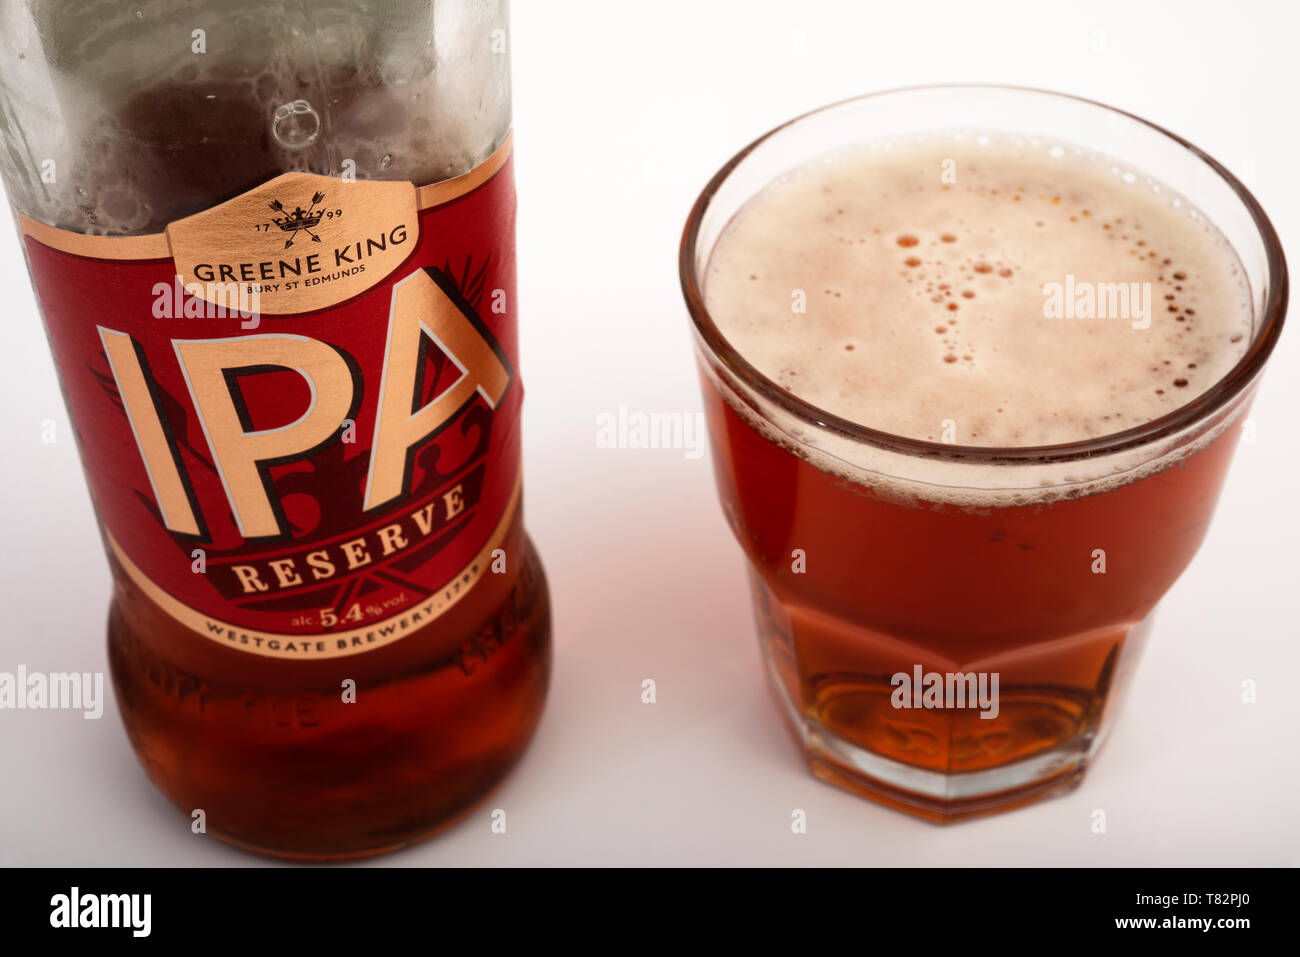 Greene King IPA Reserve beer Stock Photo